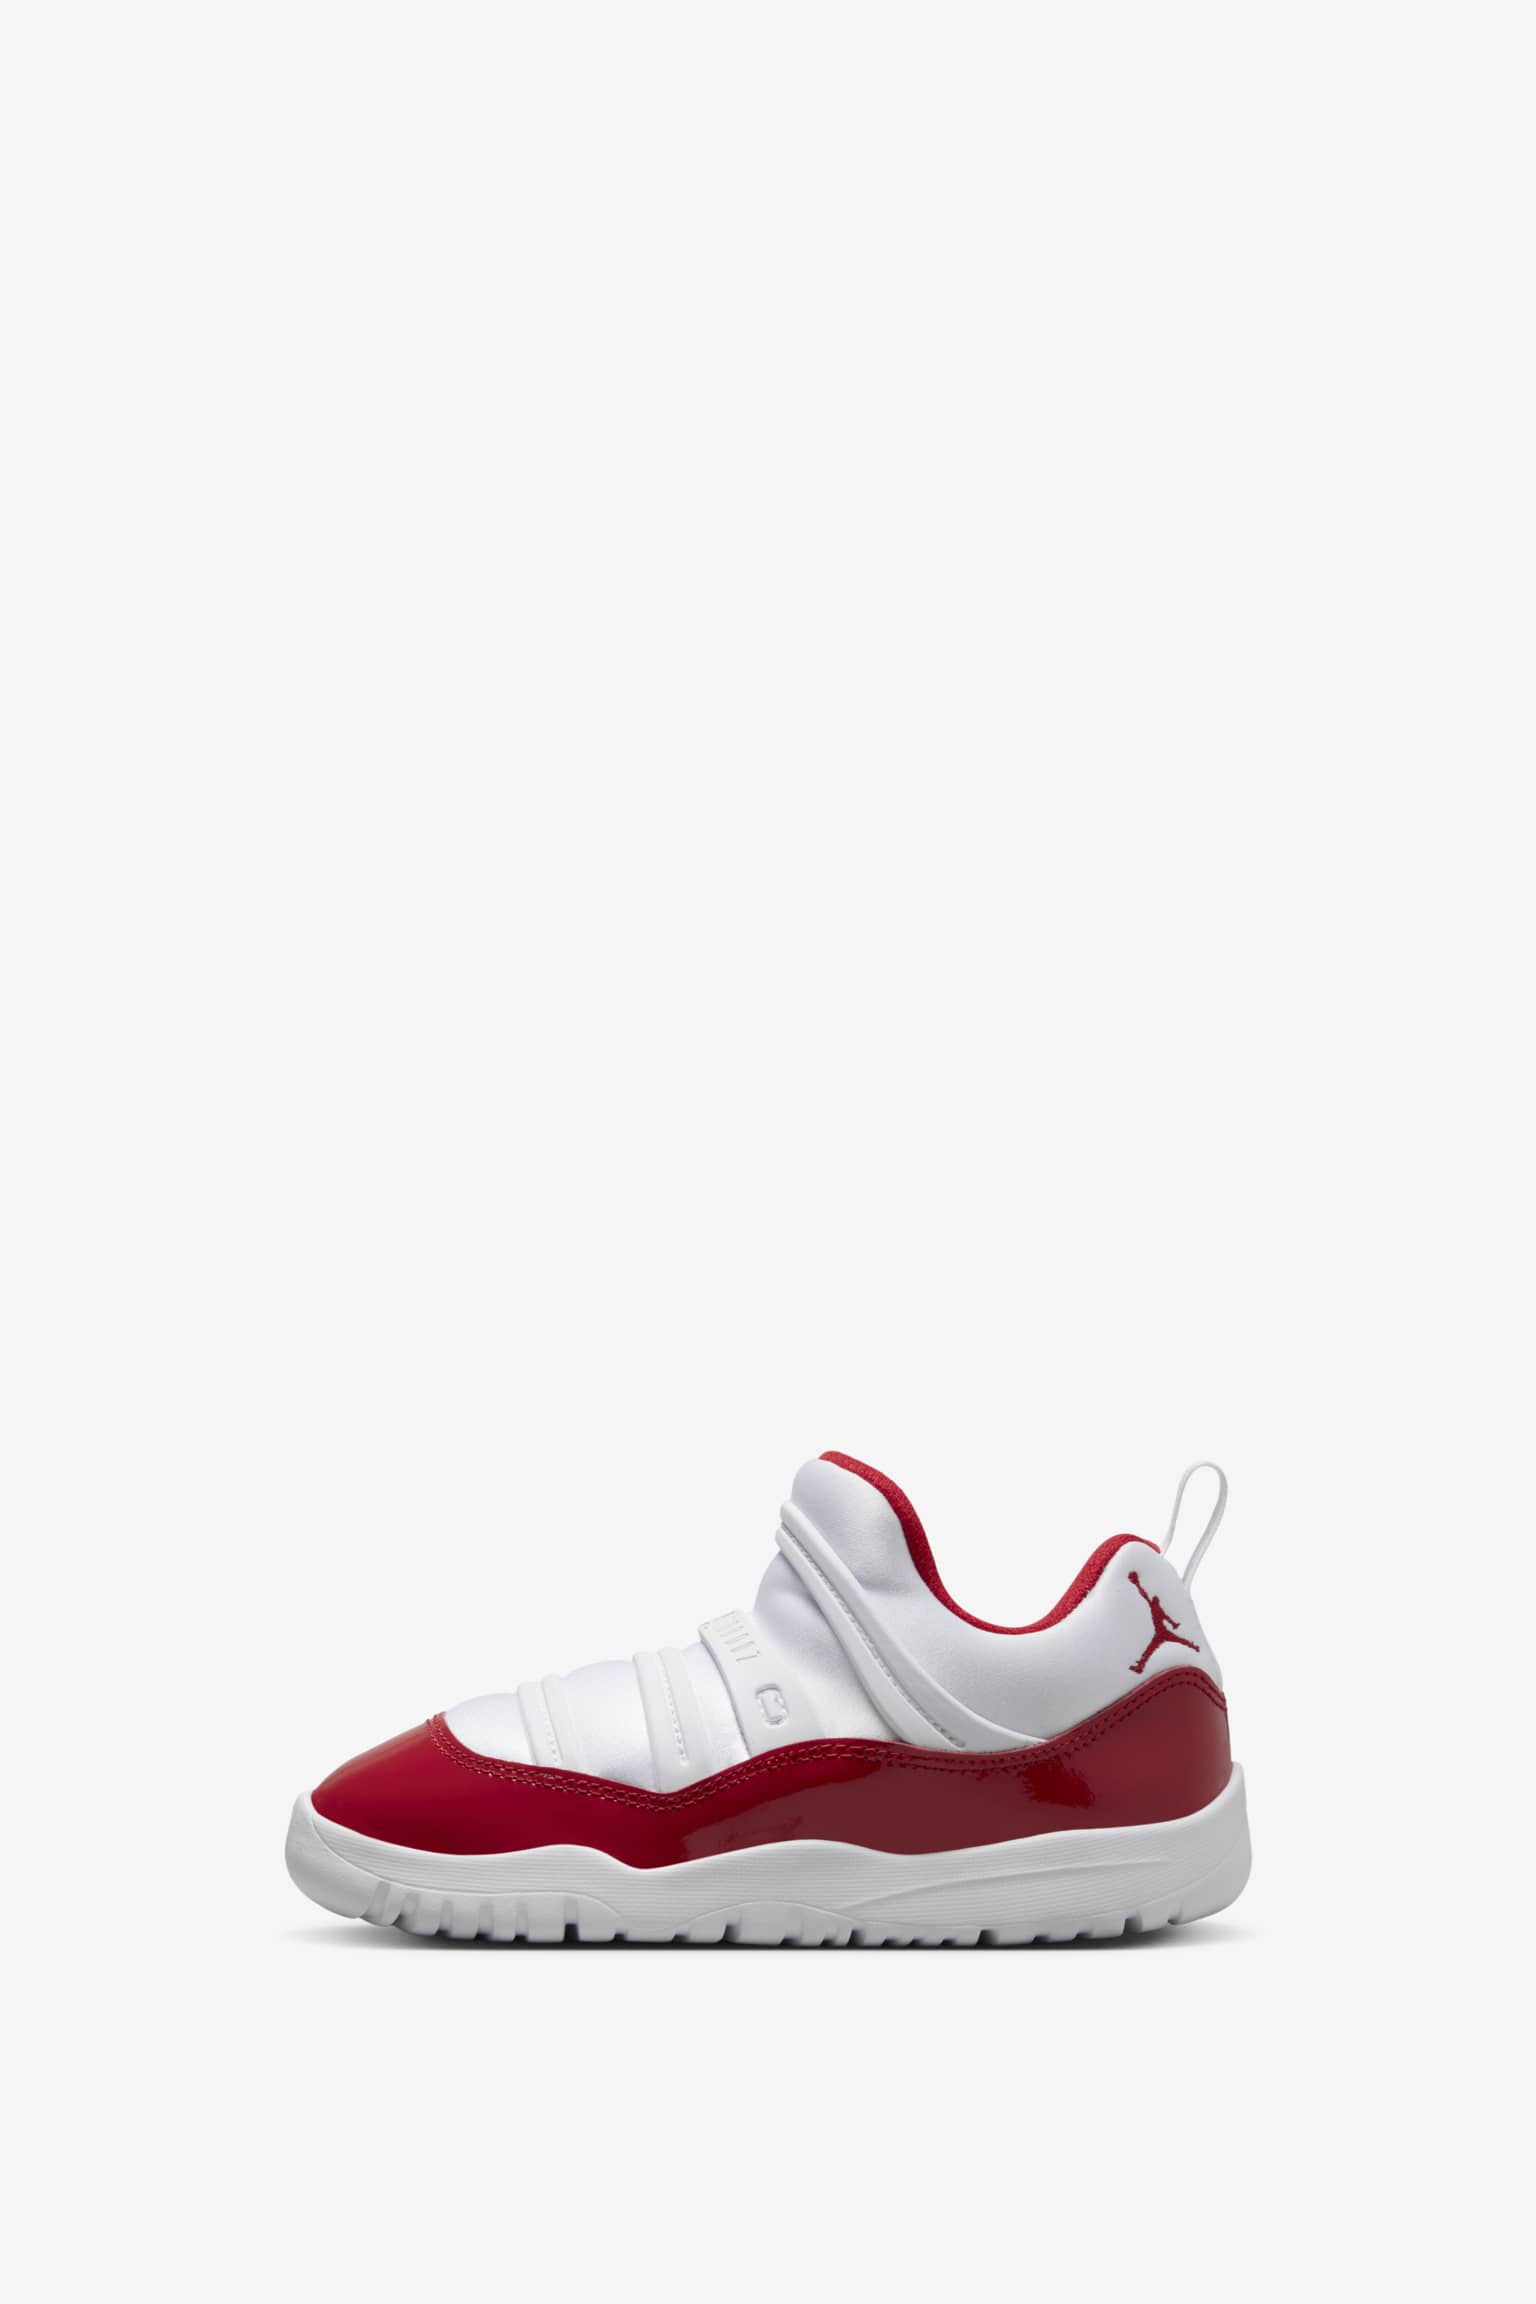 Air Jordan 11 'Varsity Red' (CT8012-116) Release Date. Nike SNKRS MY